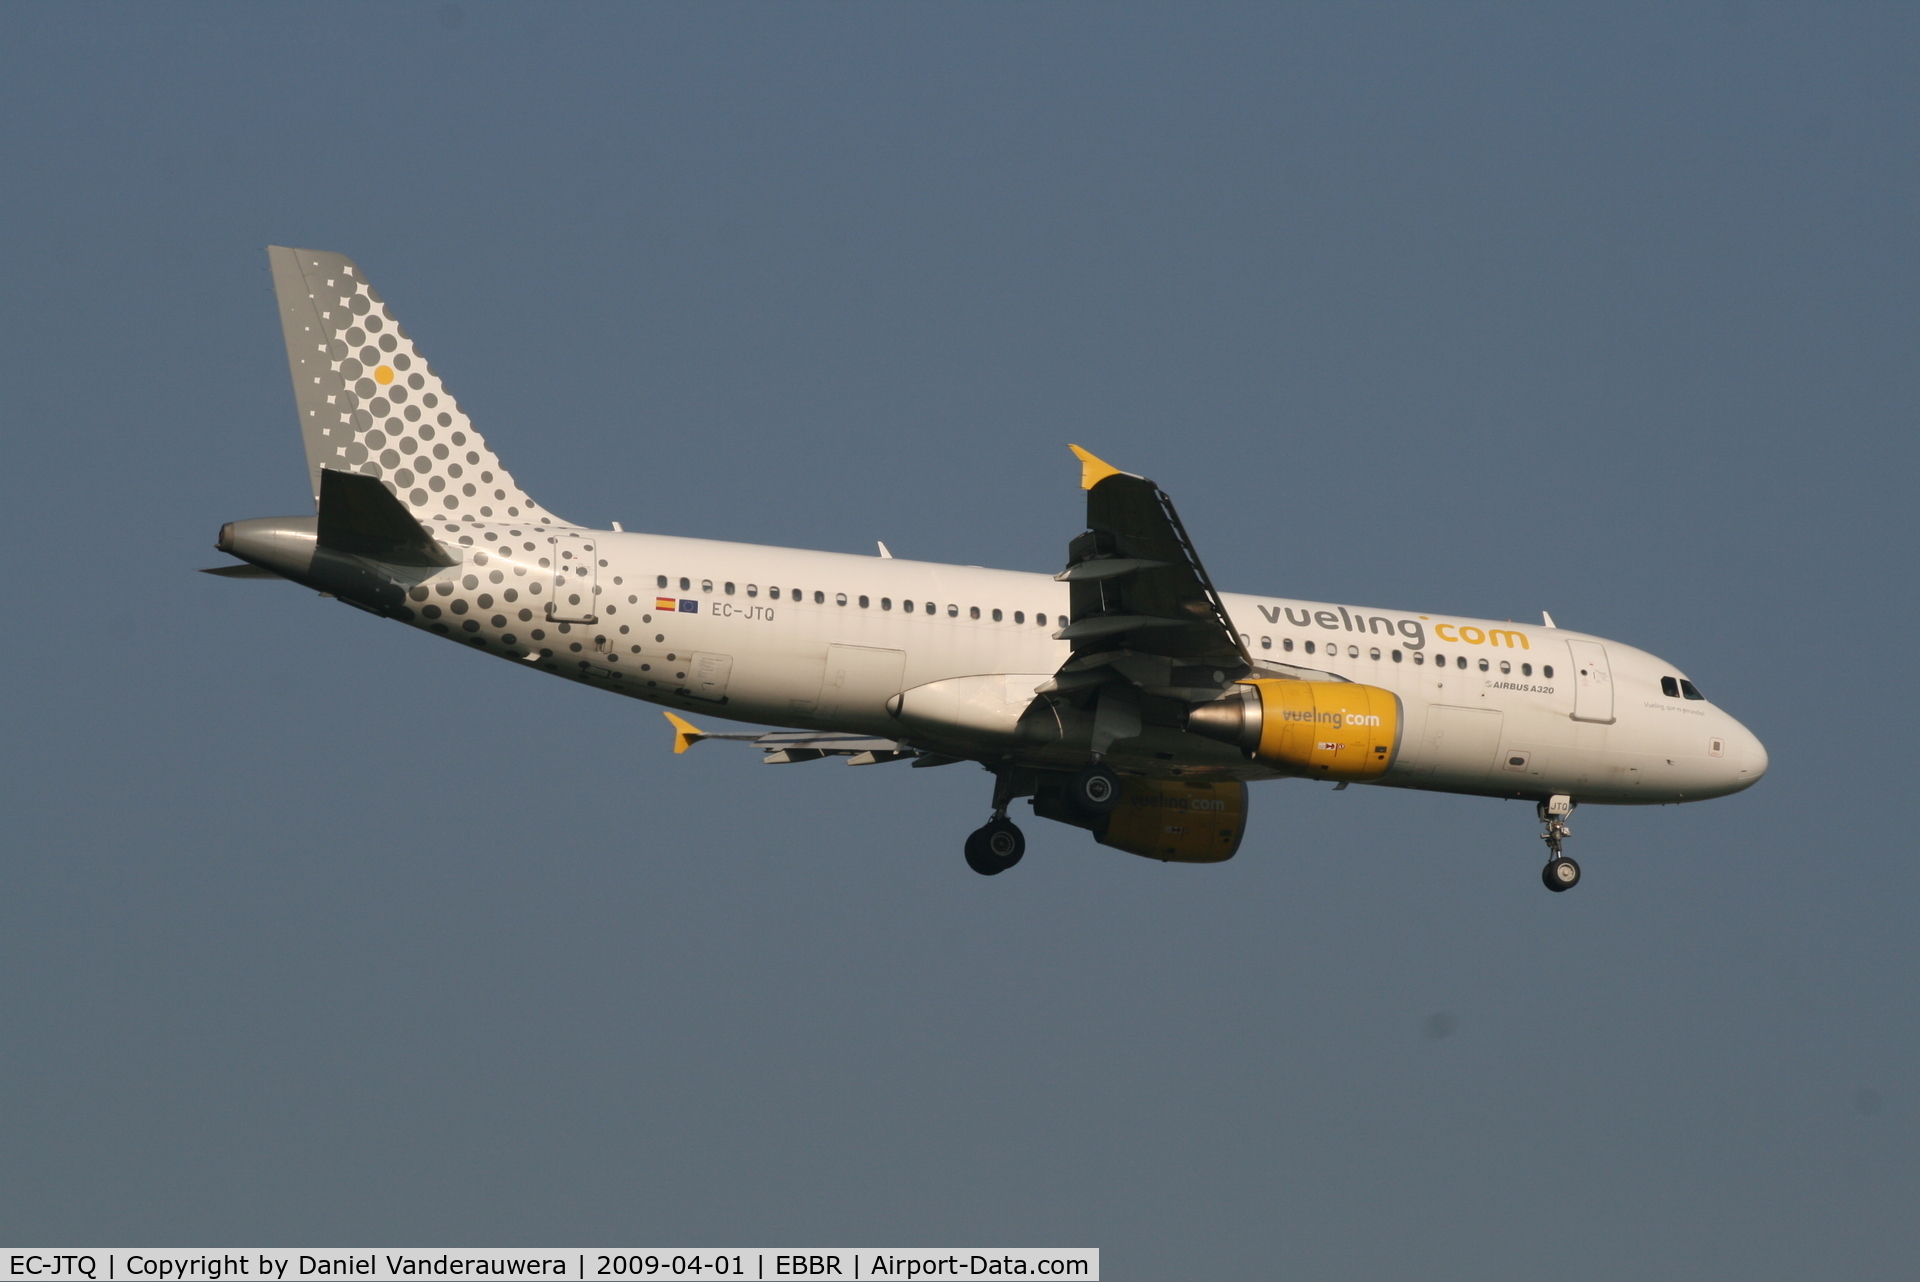 EC-JTQ, 2006 Airbus A320-214 C/N 2794, Flight VY5210 is descending to RWY 02